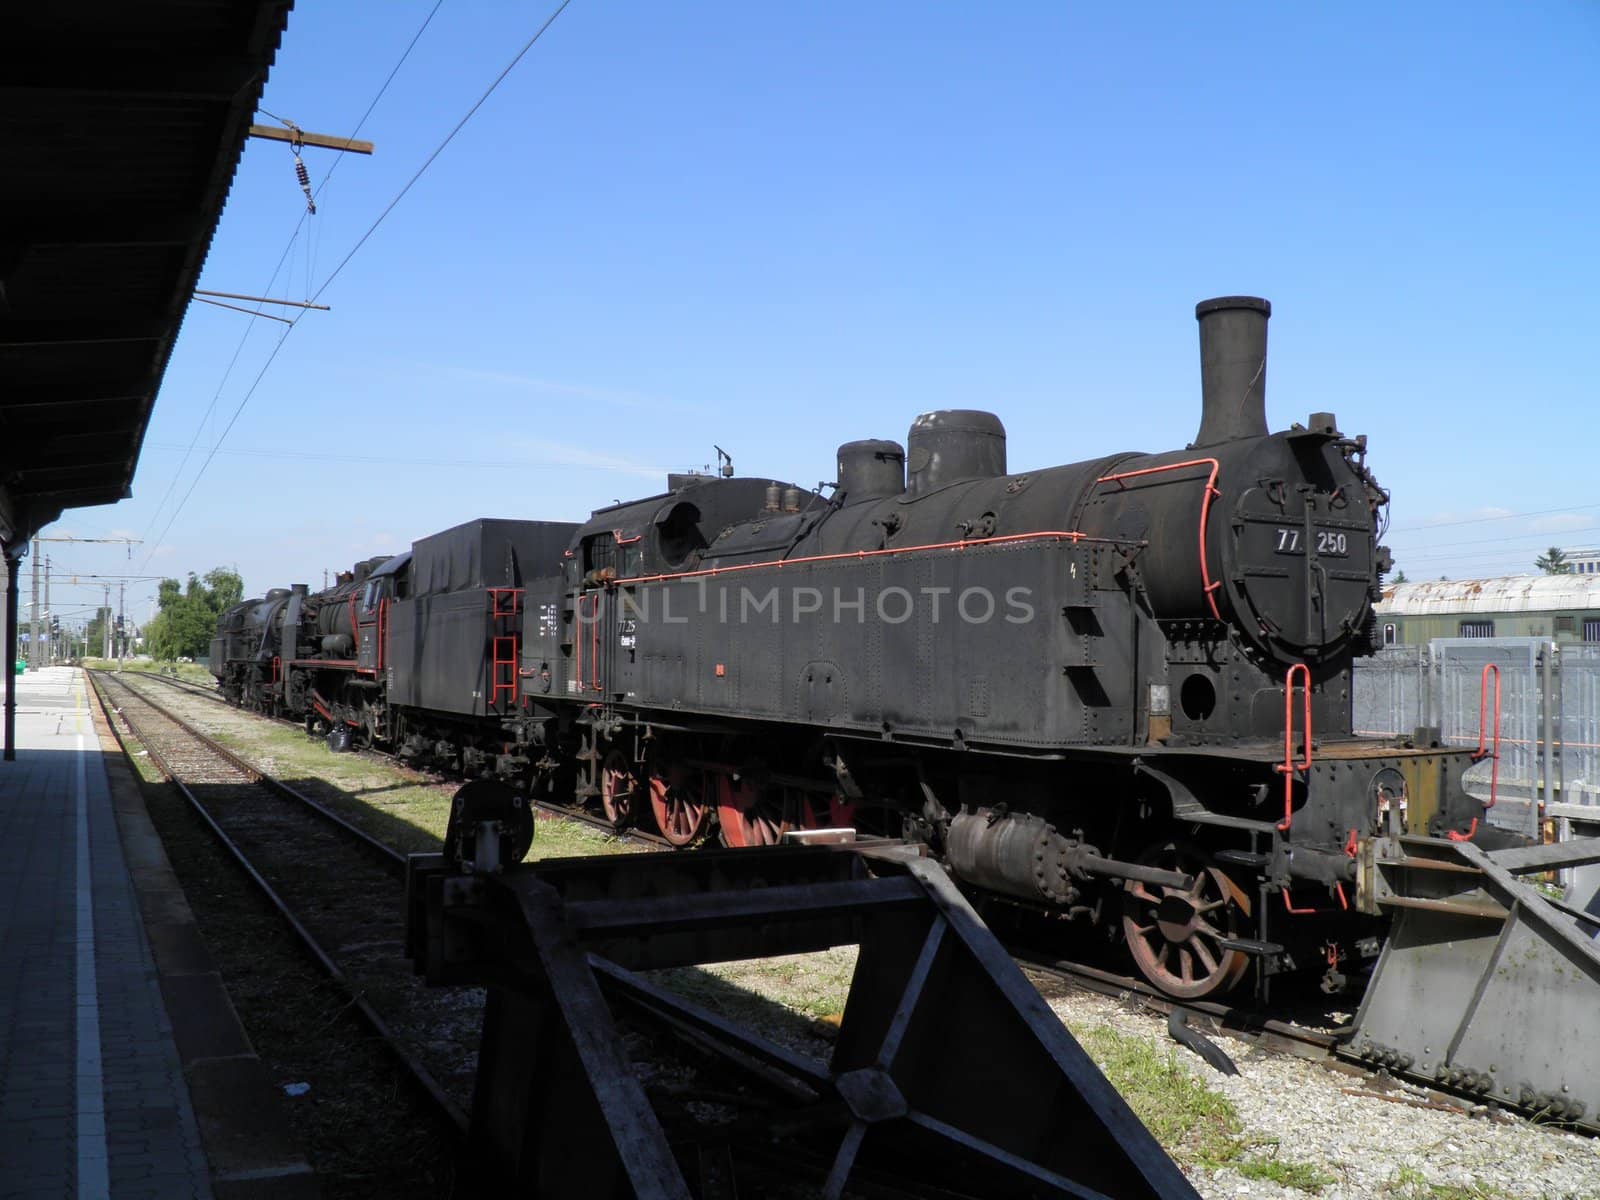 Steam engine train locomotive in a station